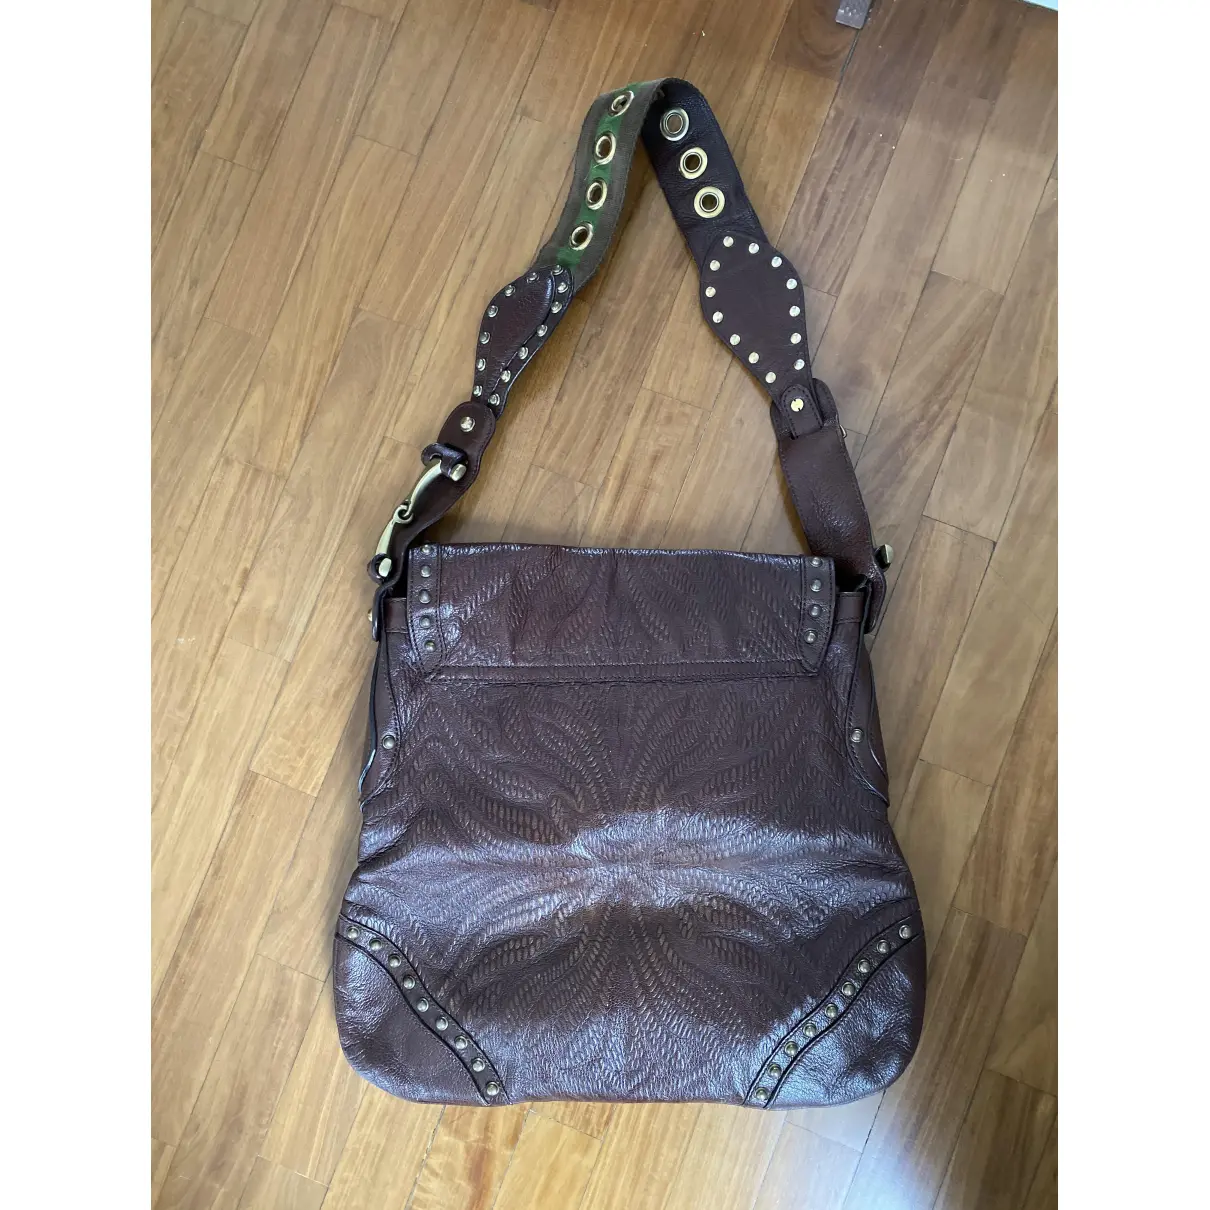 Buy Gucci Leather handbag online